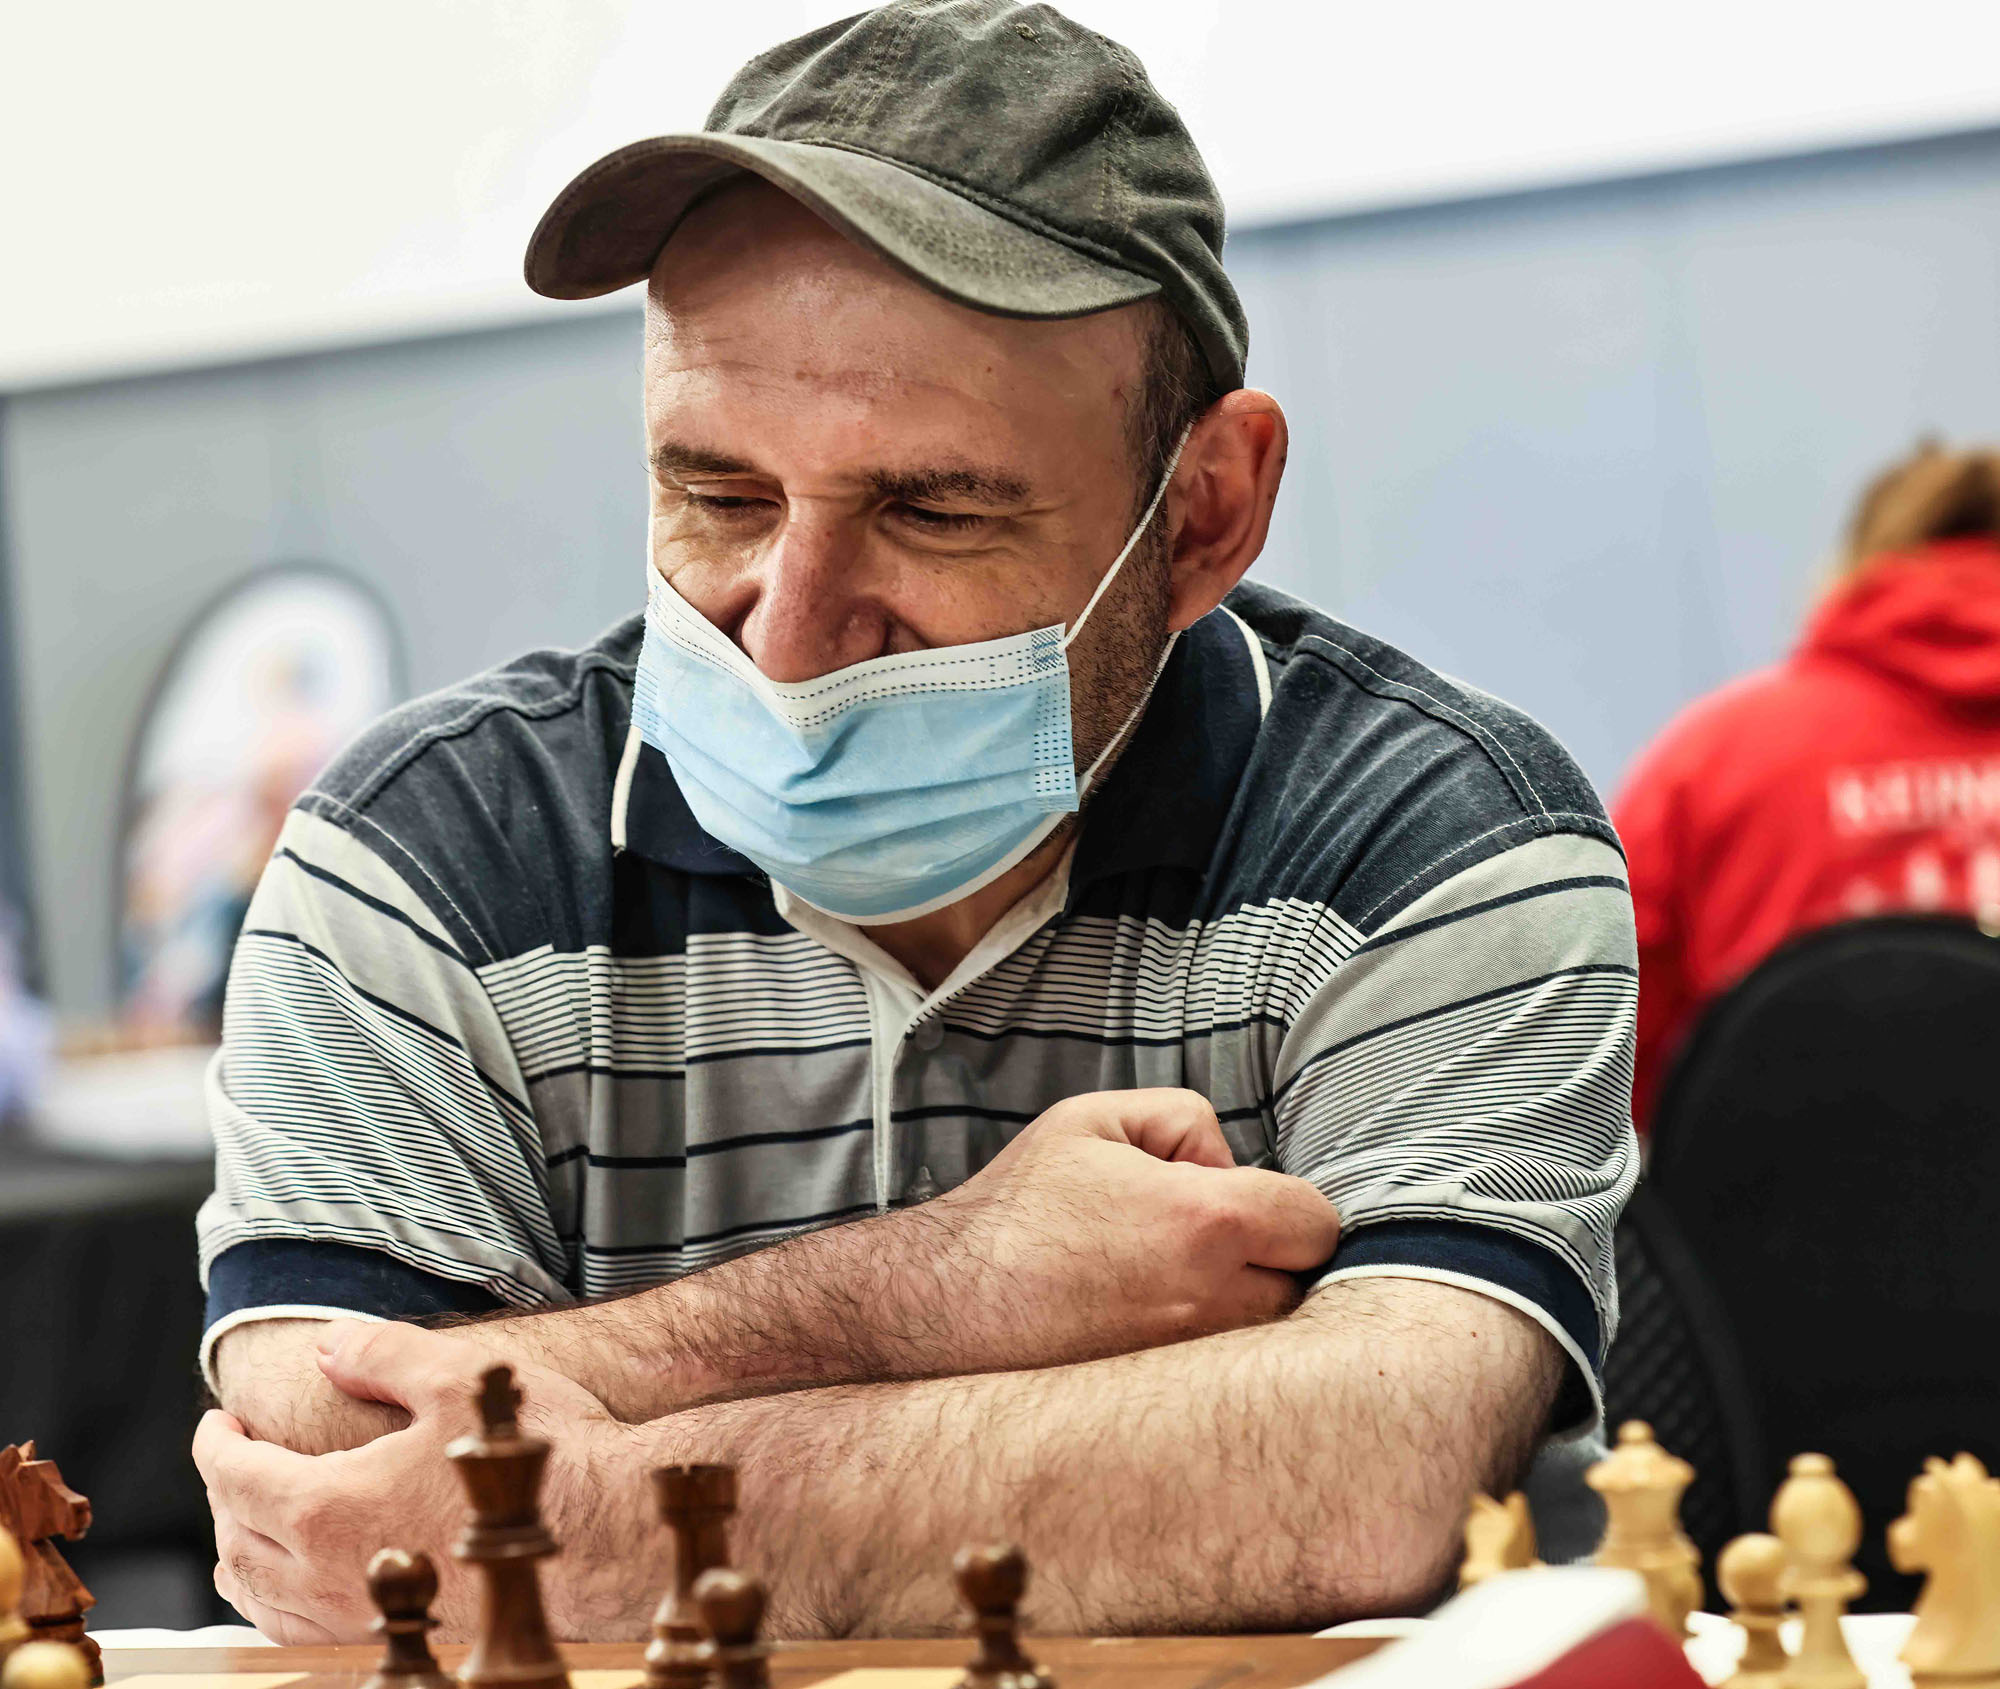 Round 1 – FIDE Chess Olympiad 2022